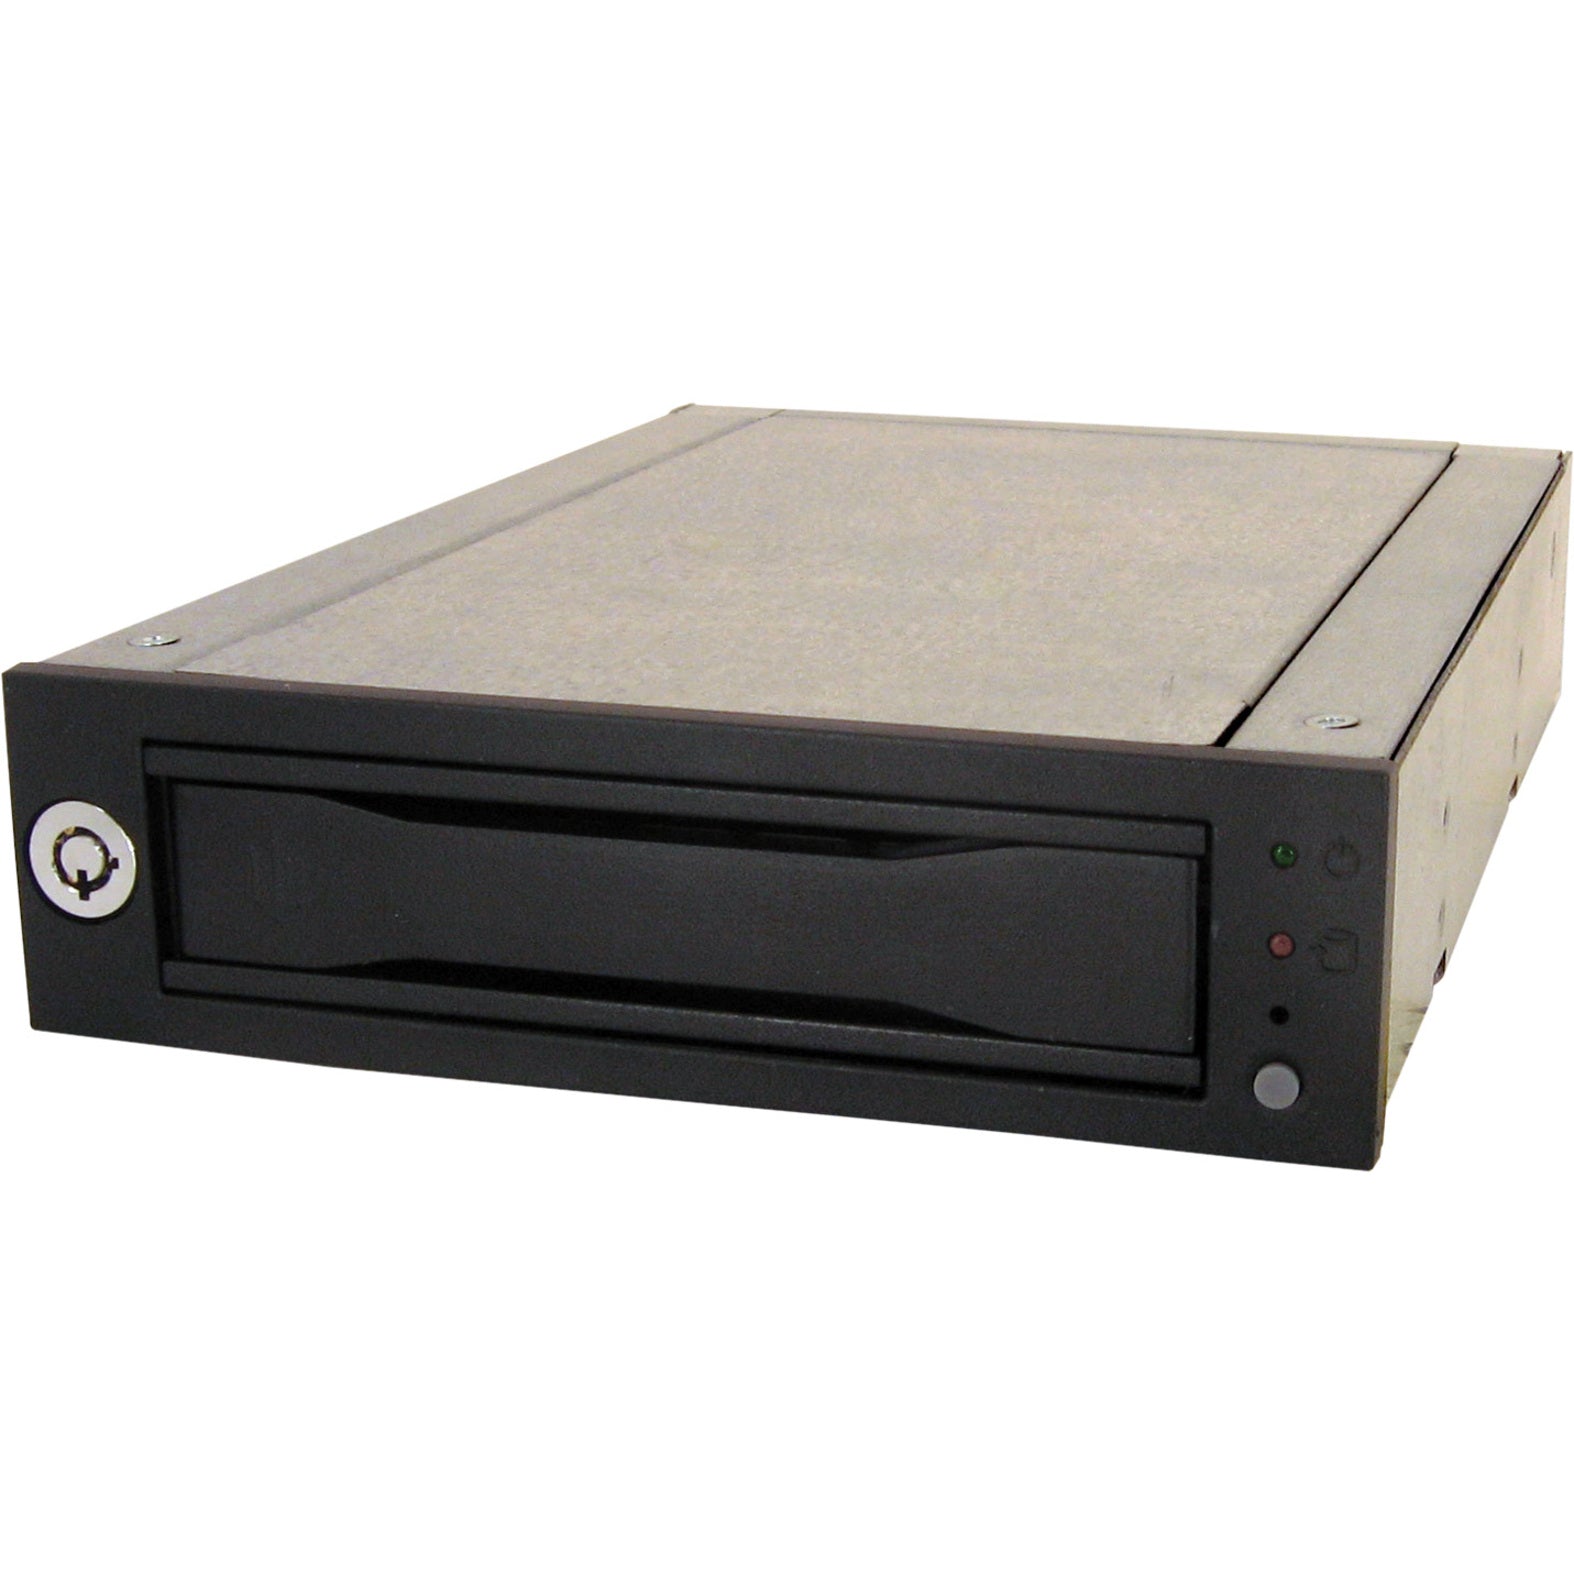 CRU 6616-6500-0500 Data Express DX115 Drive Bay Adapter - Black, Removable Hard Drive Enclosure